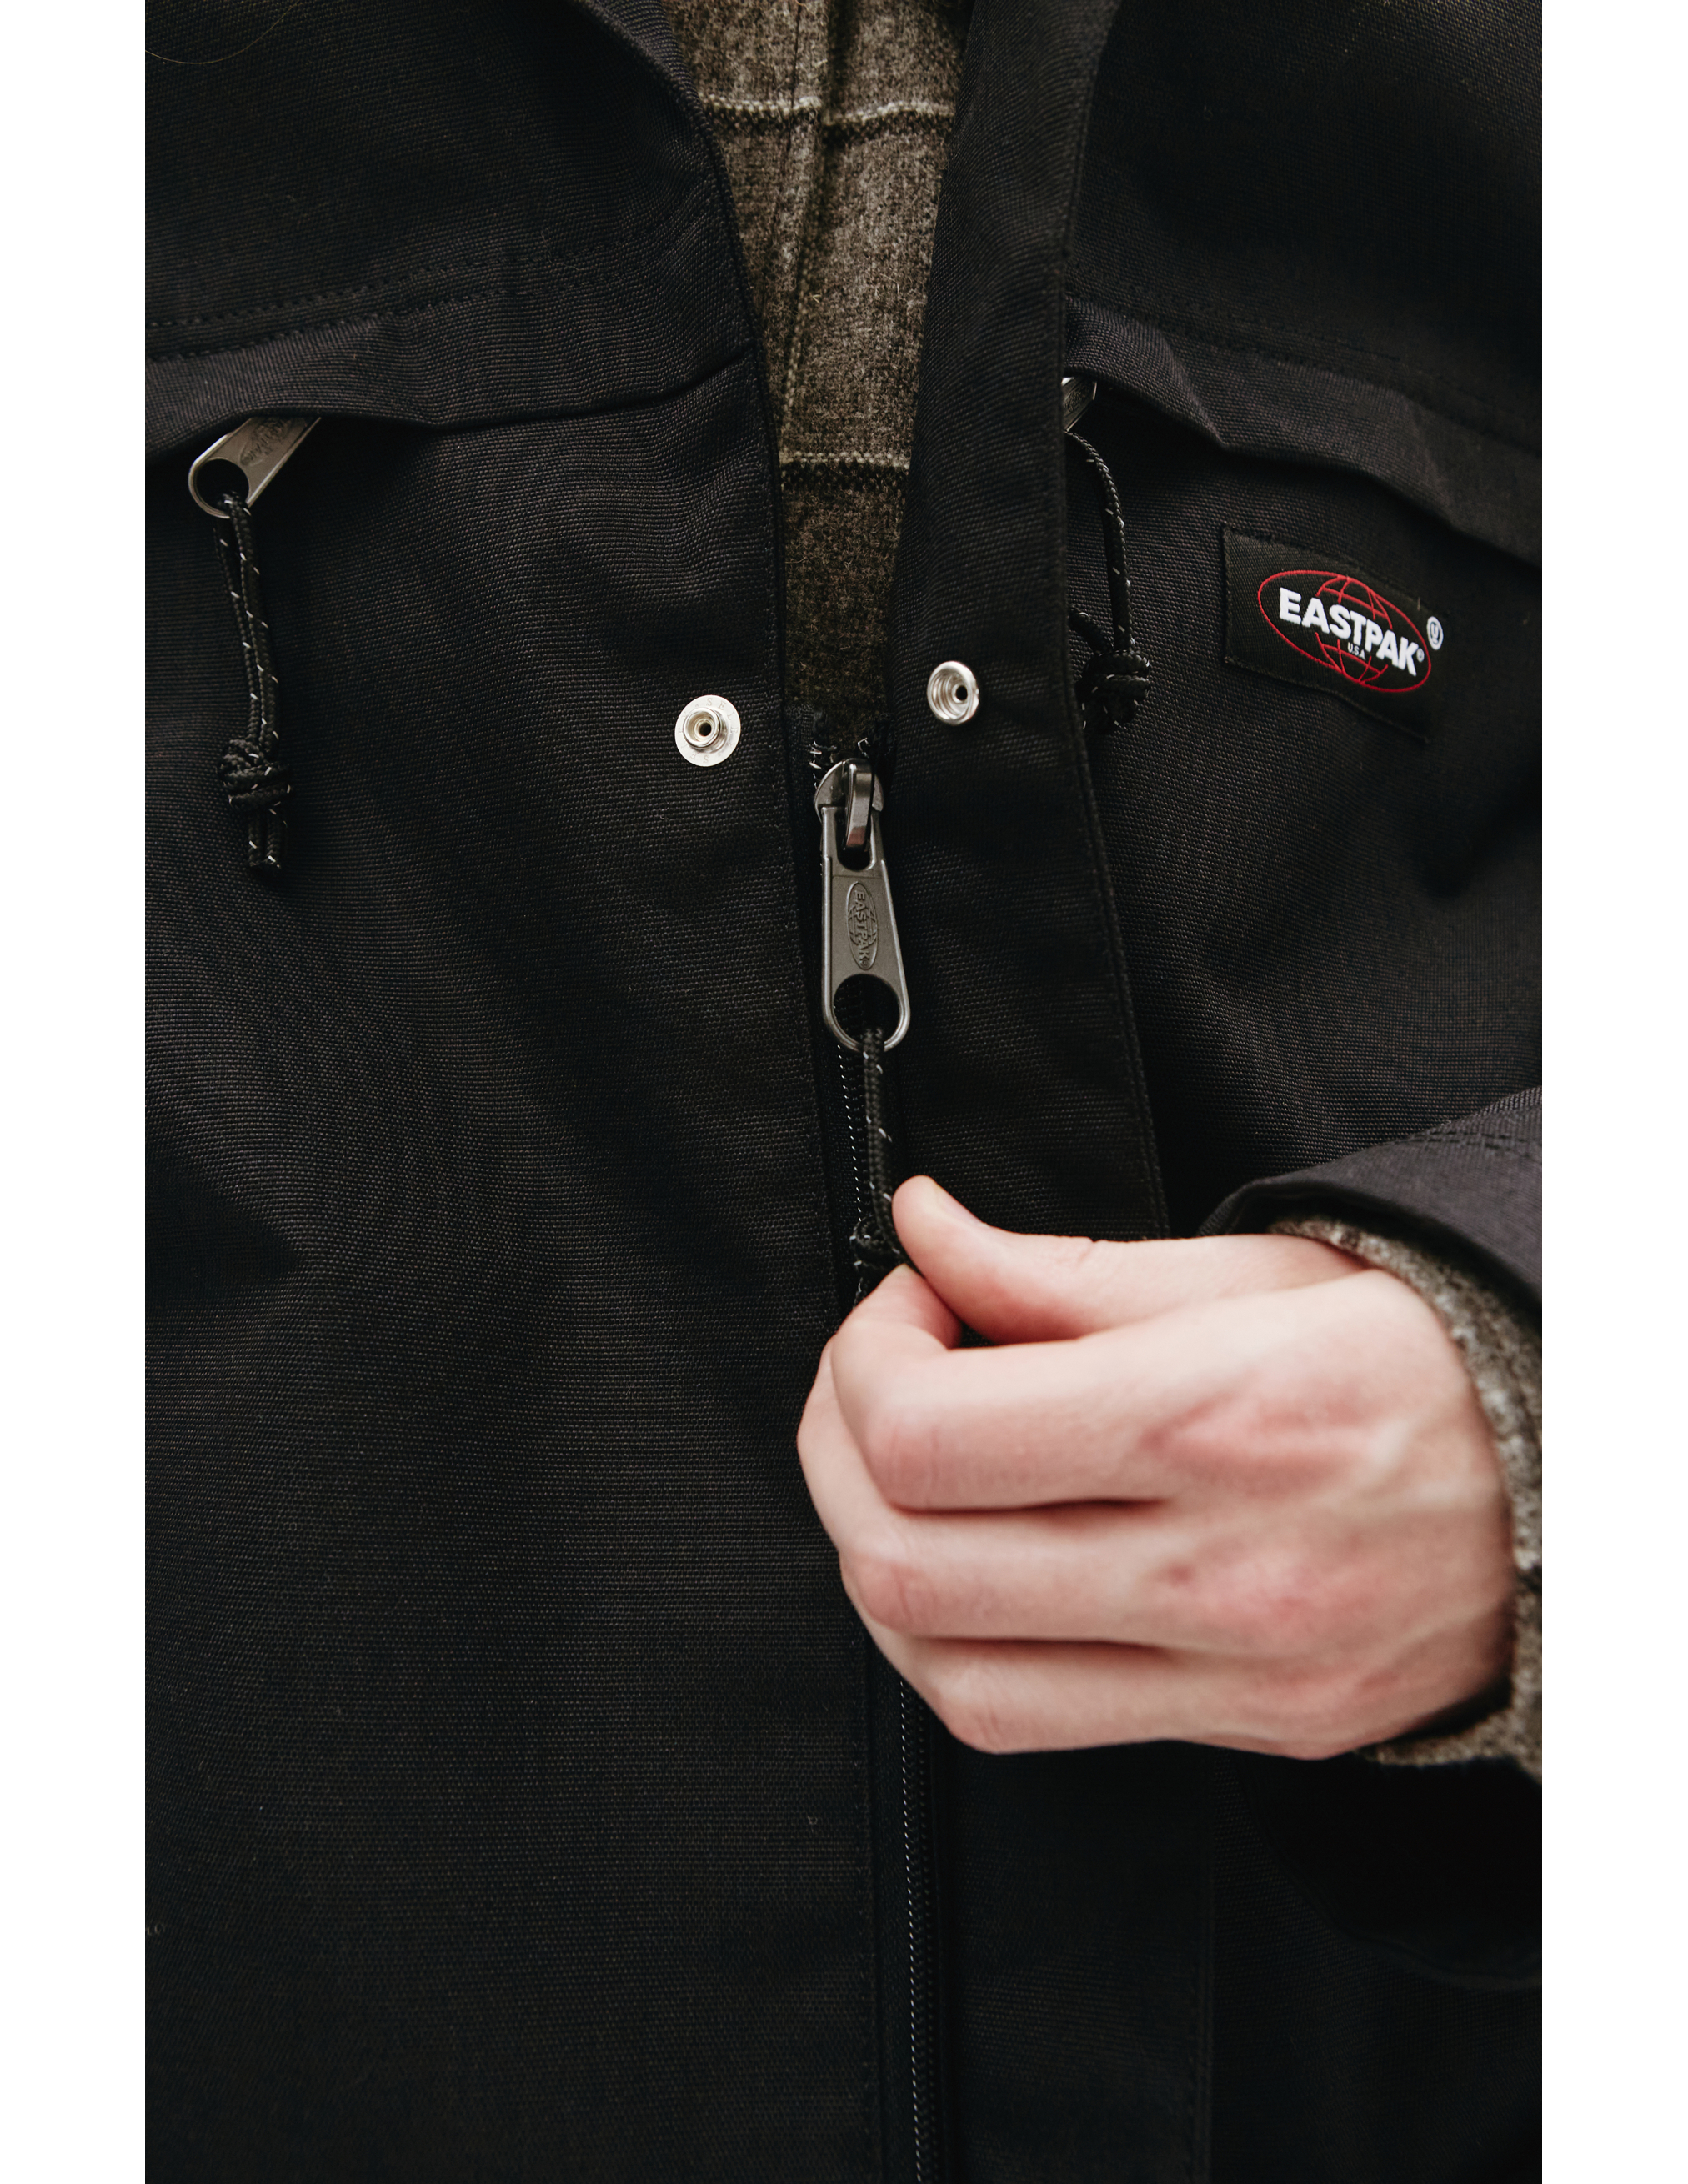 Плащ Undercover x Eastpak с накладными карманами - Undercover UC2A4309/blk Фото 6